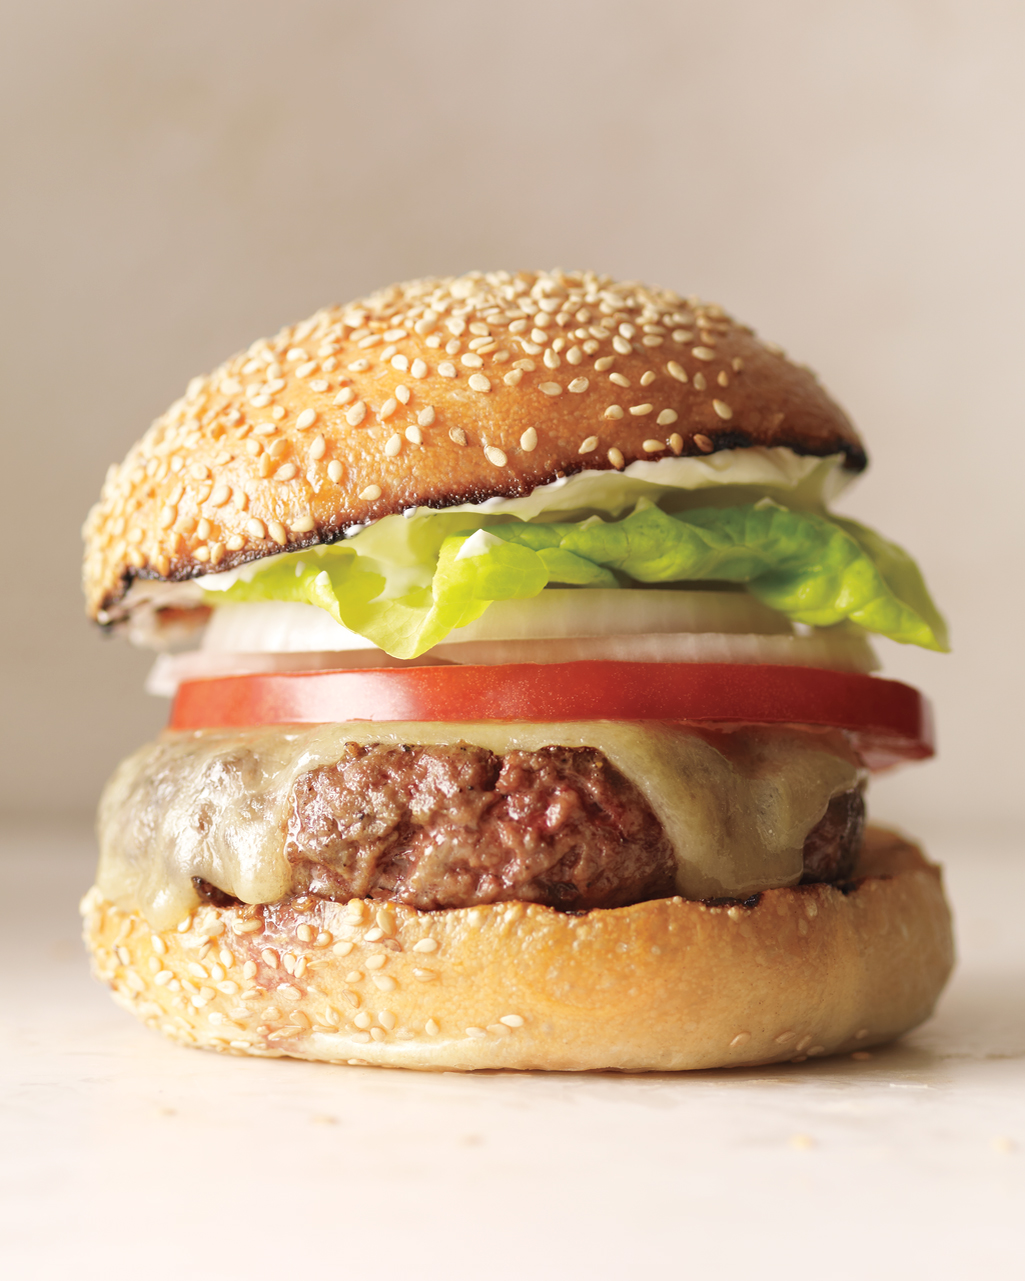 Burger Grilling Chart